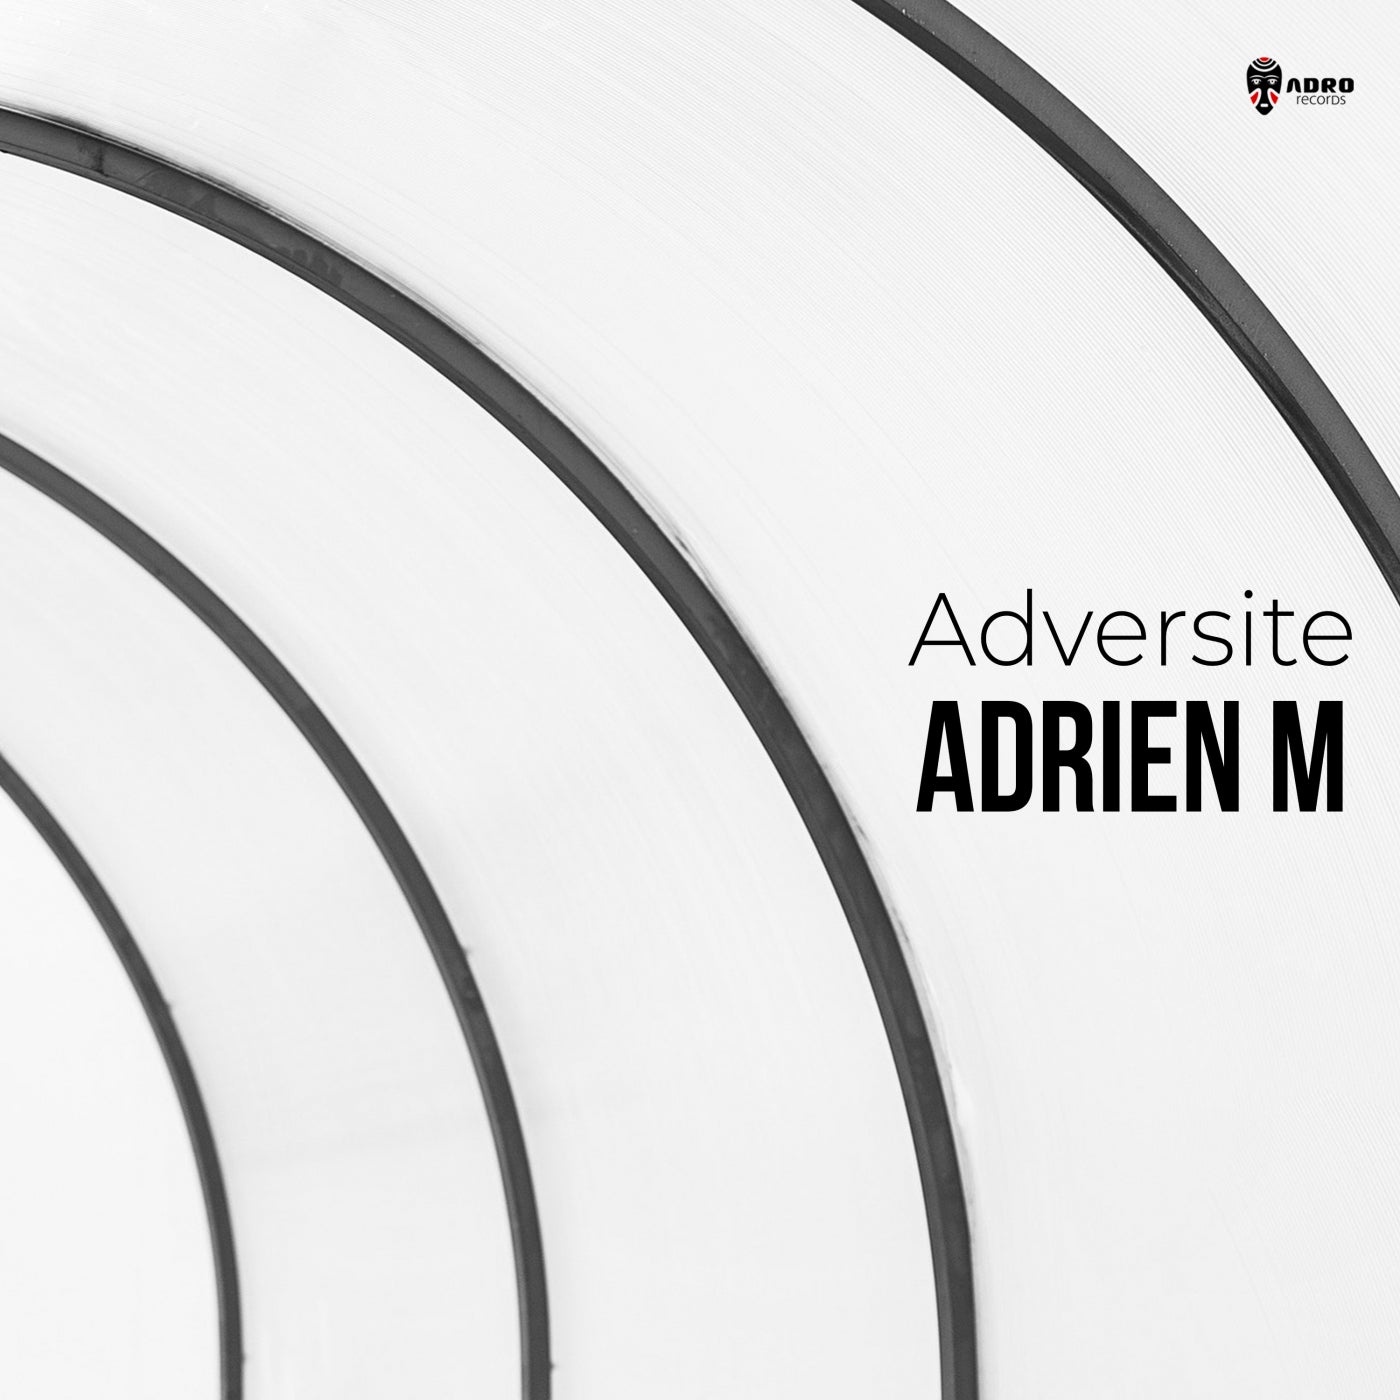 Adrien M - Adversite [ADR484]